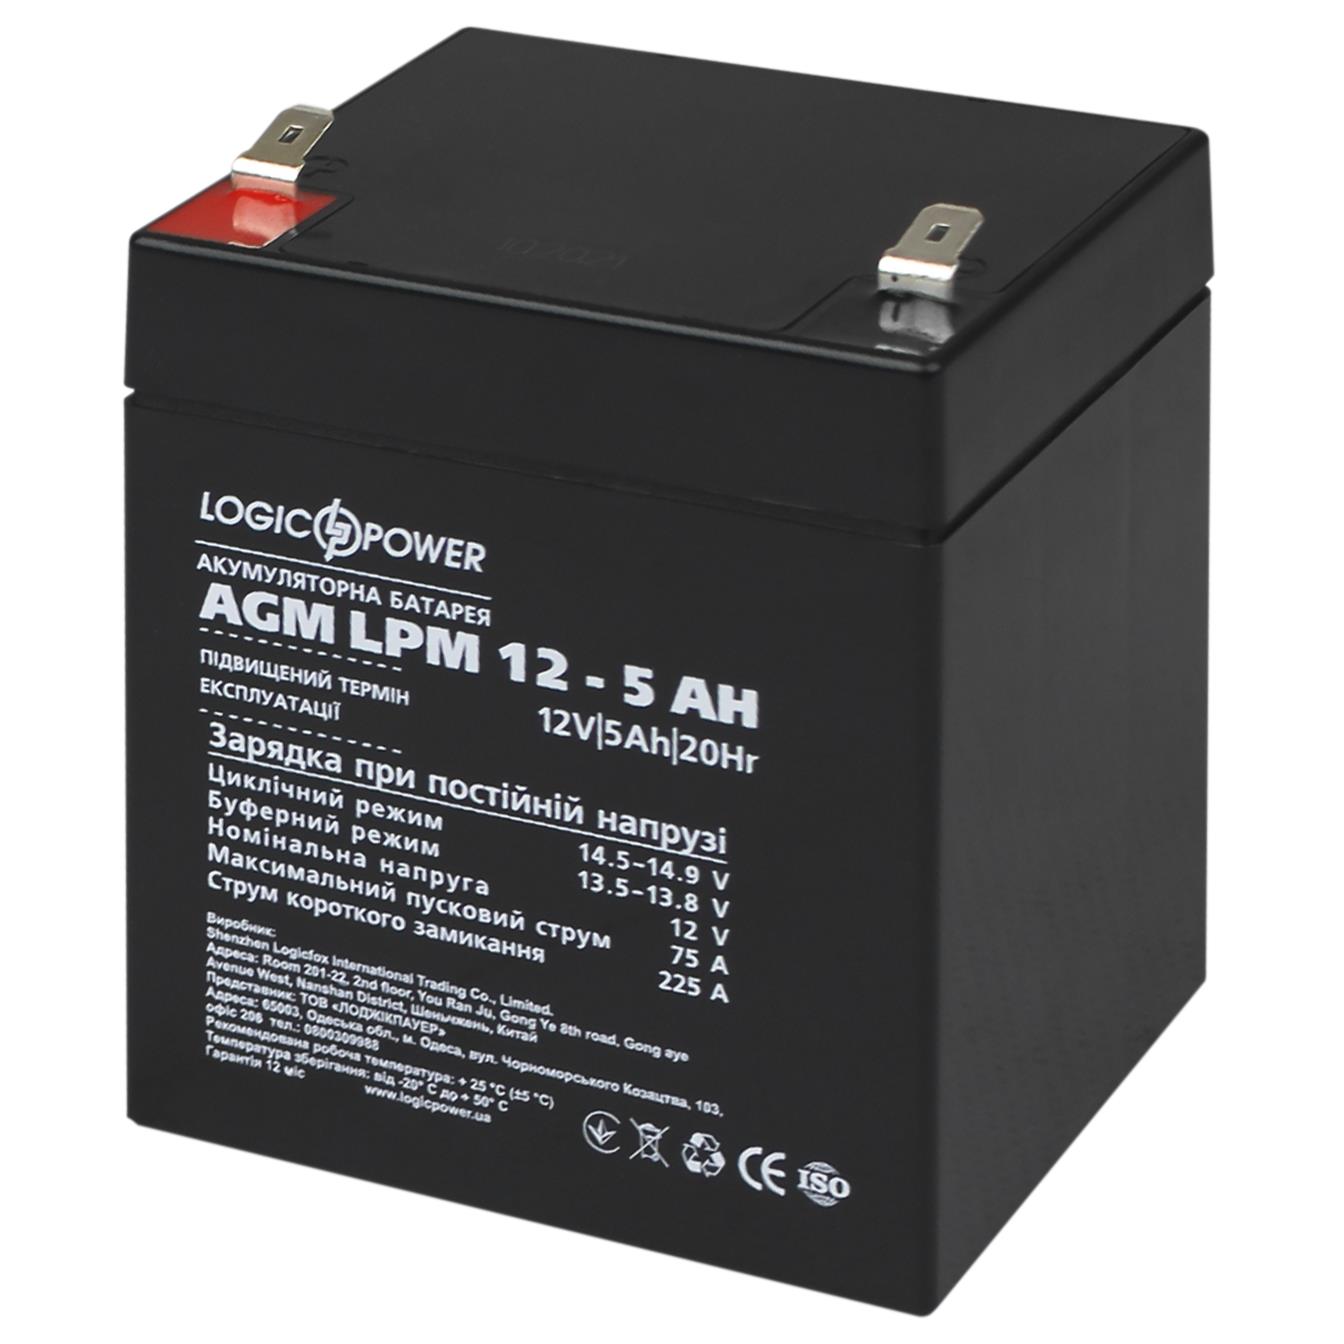 Цена аккумулятор свинцово-кислотный LogicPower AGM LPM 12V - 5 Ah (3861) в Киеве